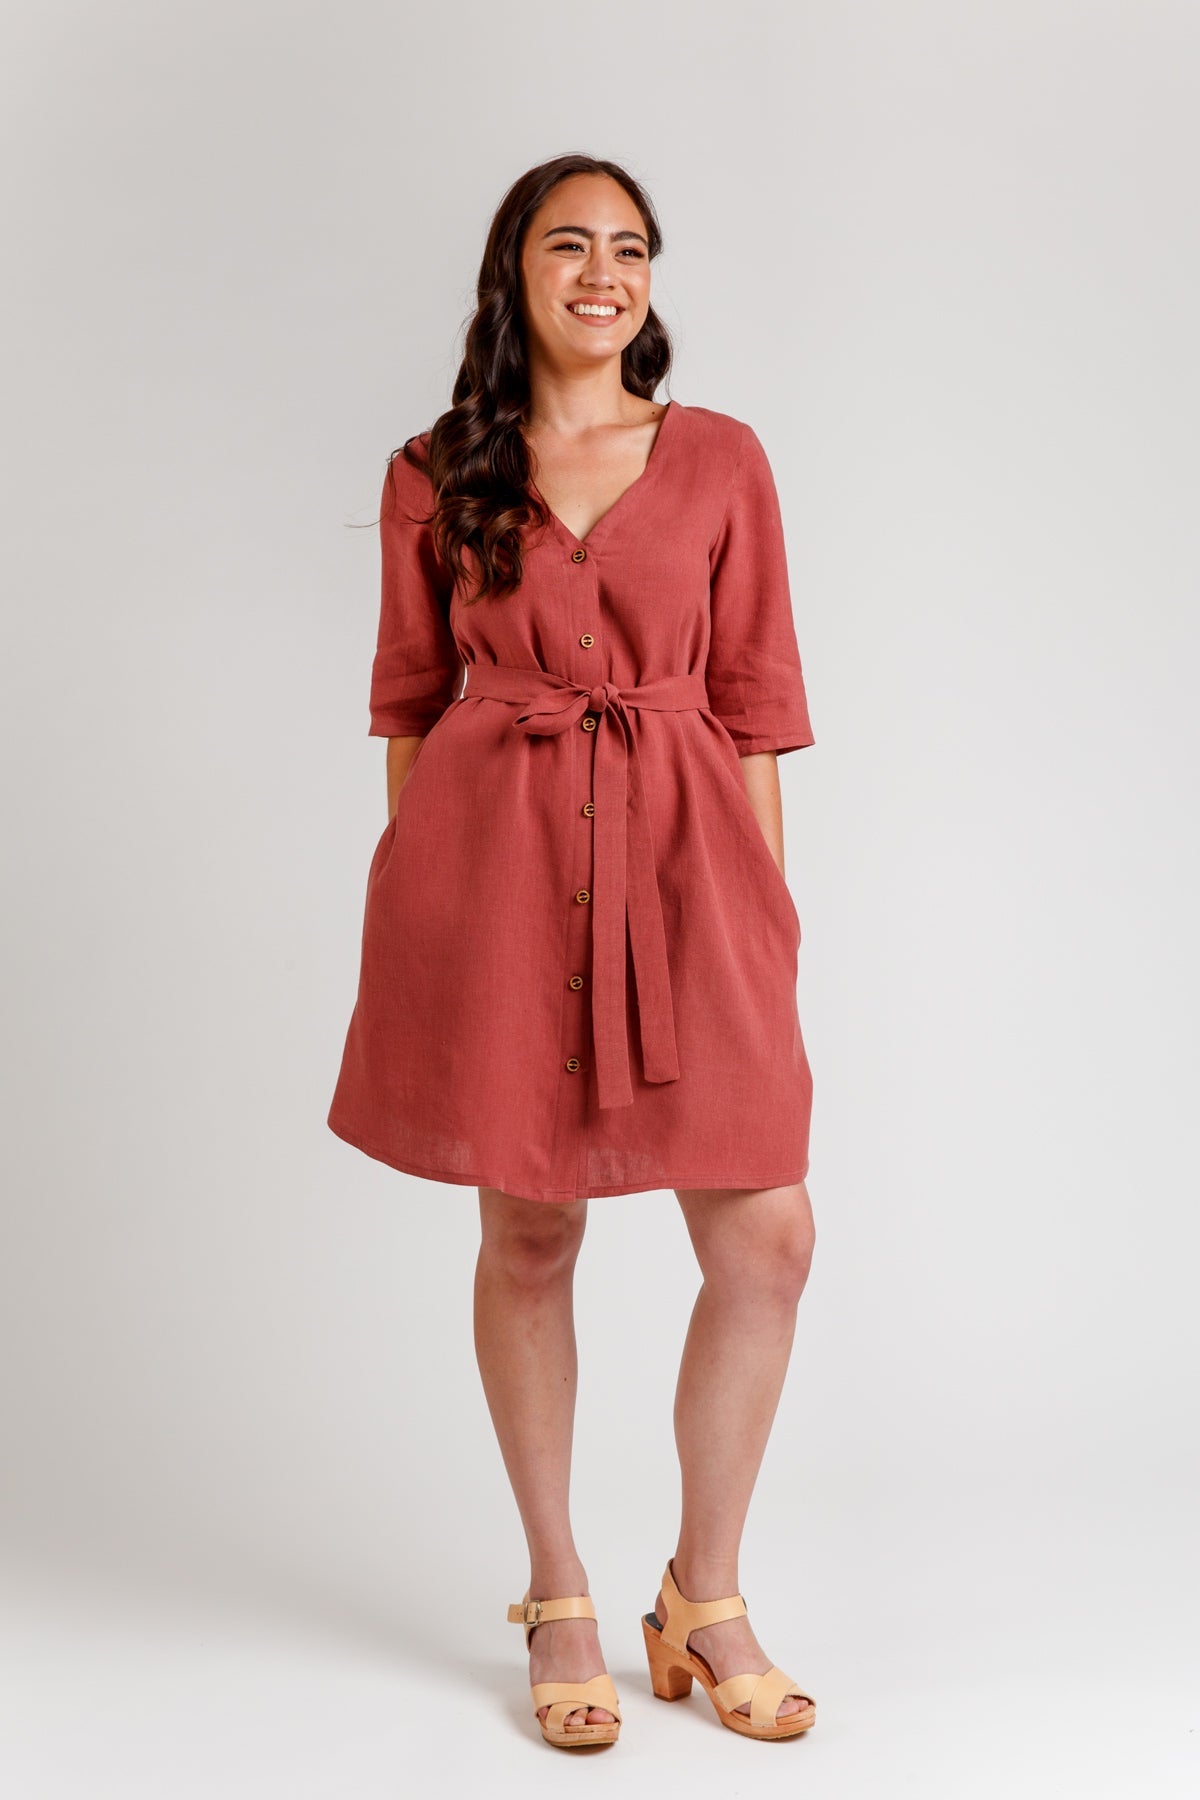 Megan Nielsen - Darling Ranges dress | Core Fabrics